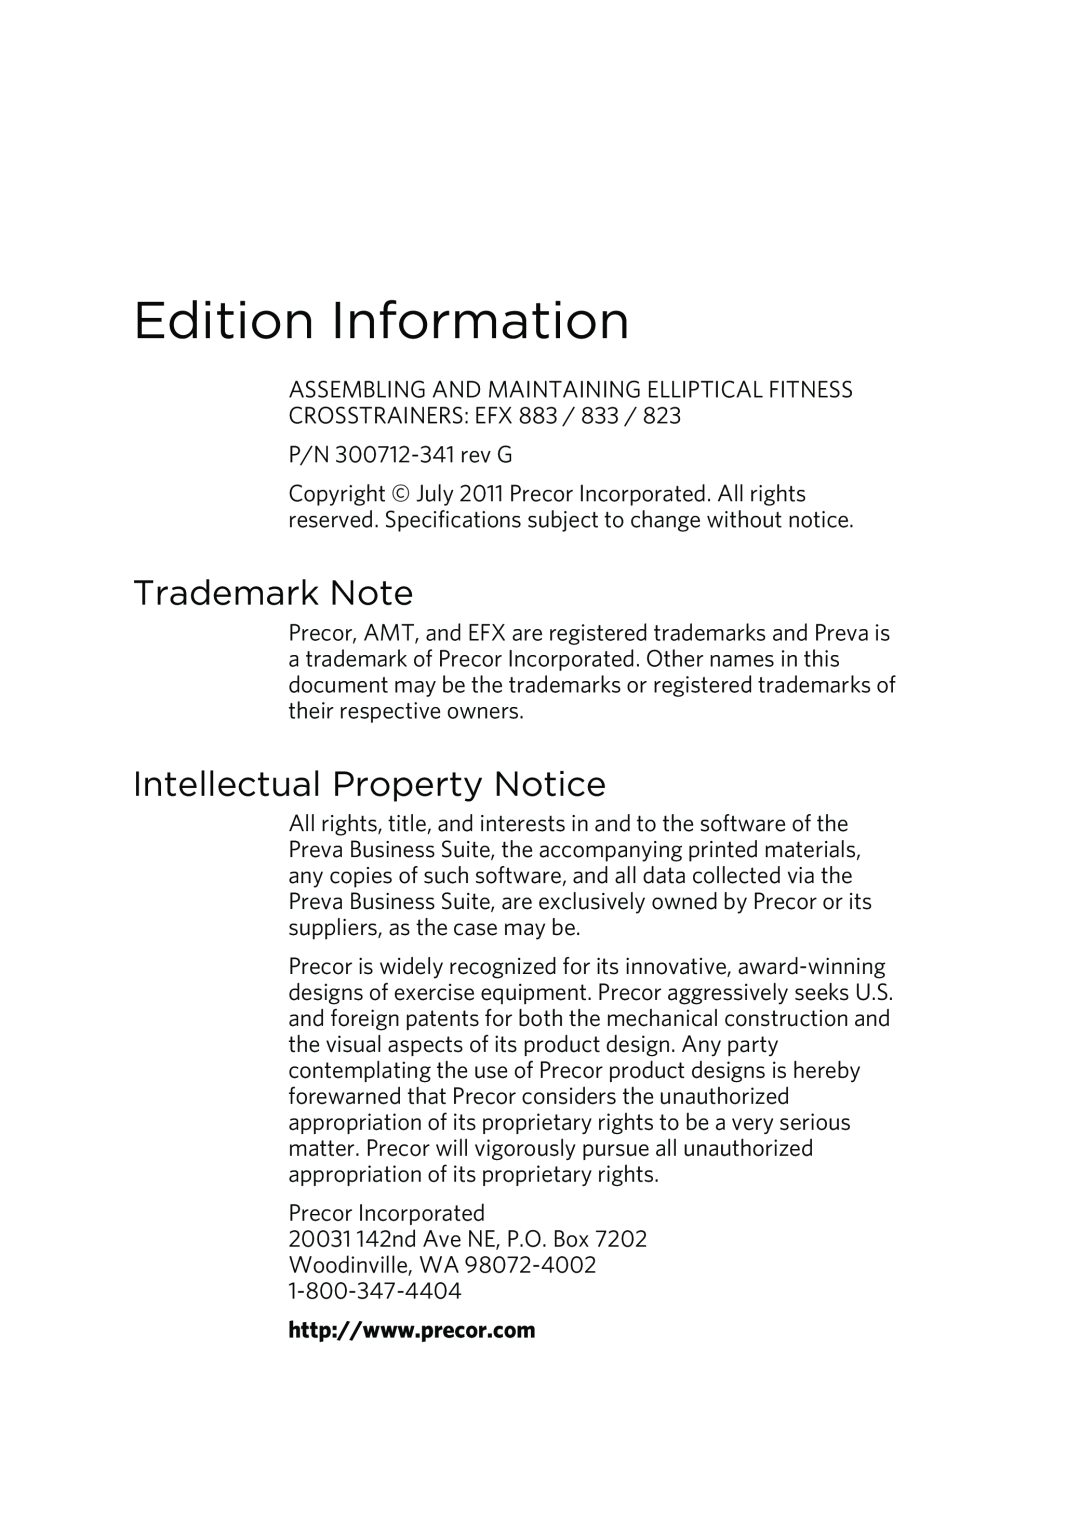 Precor P80 manual Edition Information, Trademark Note, Intellectual Property Notice, P/N 300712-341rev G 